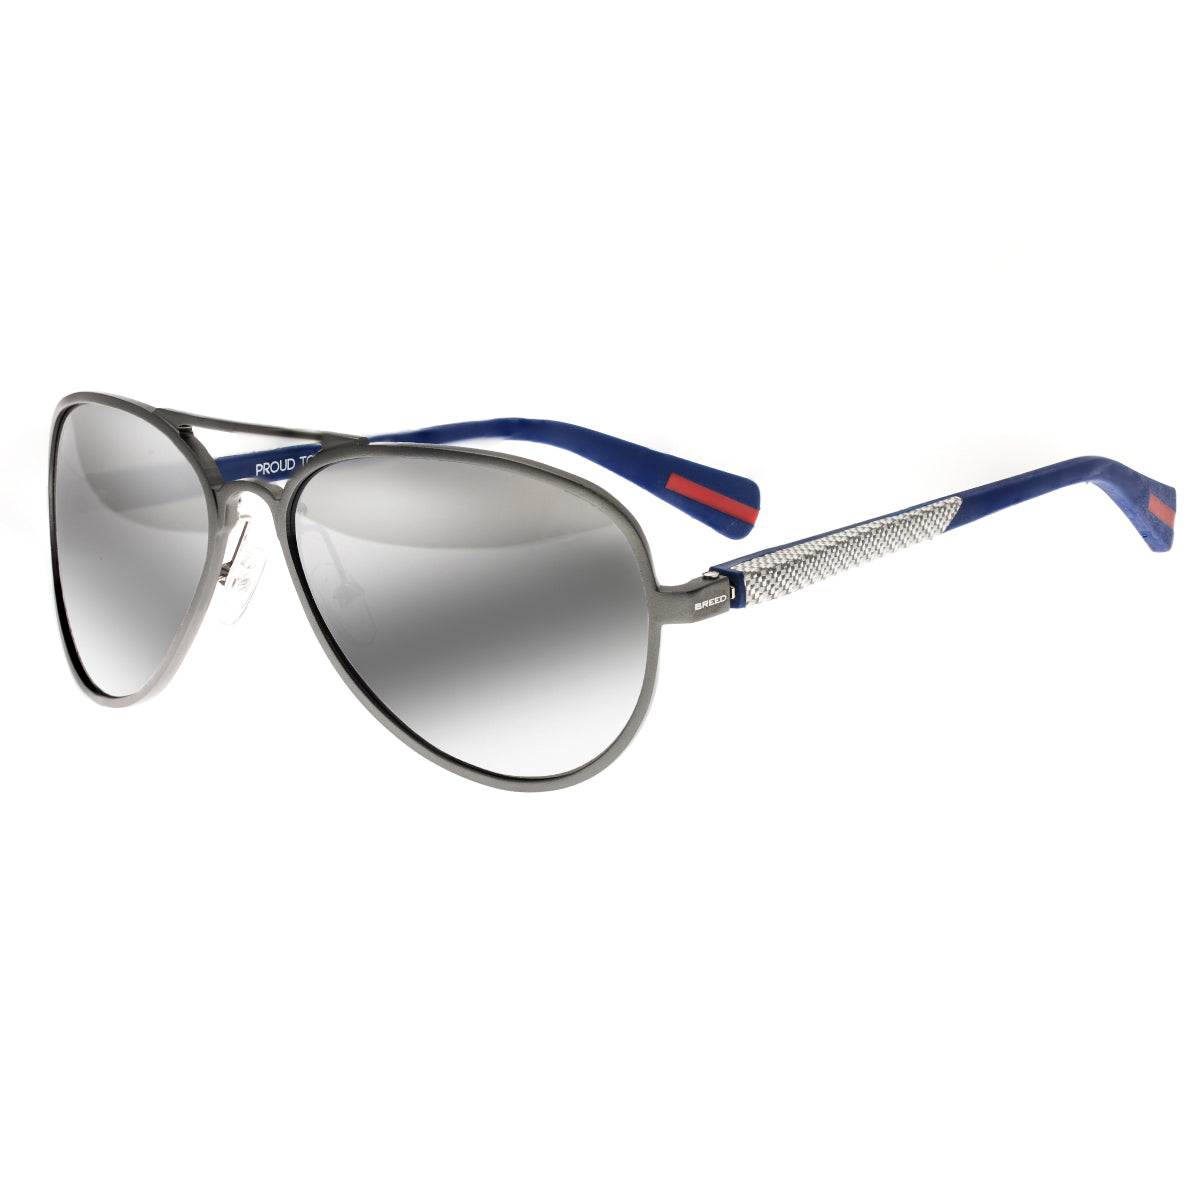 Breed Dorado Titanium Polarized Sunglasses - Gunmetal/Black - BSG030SR